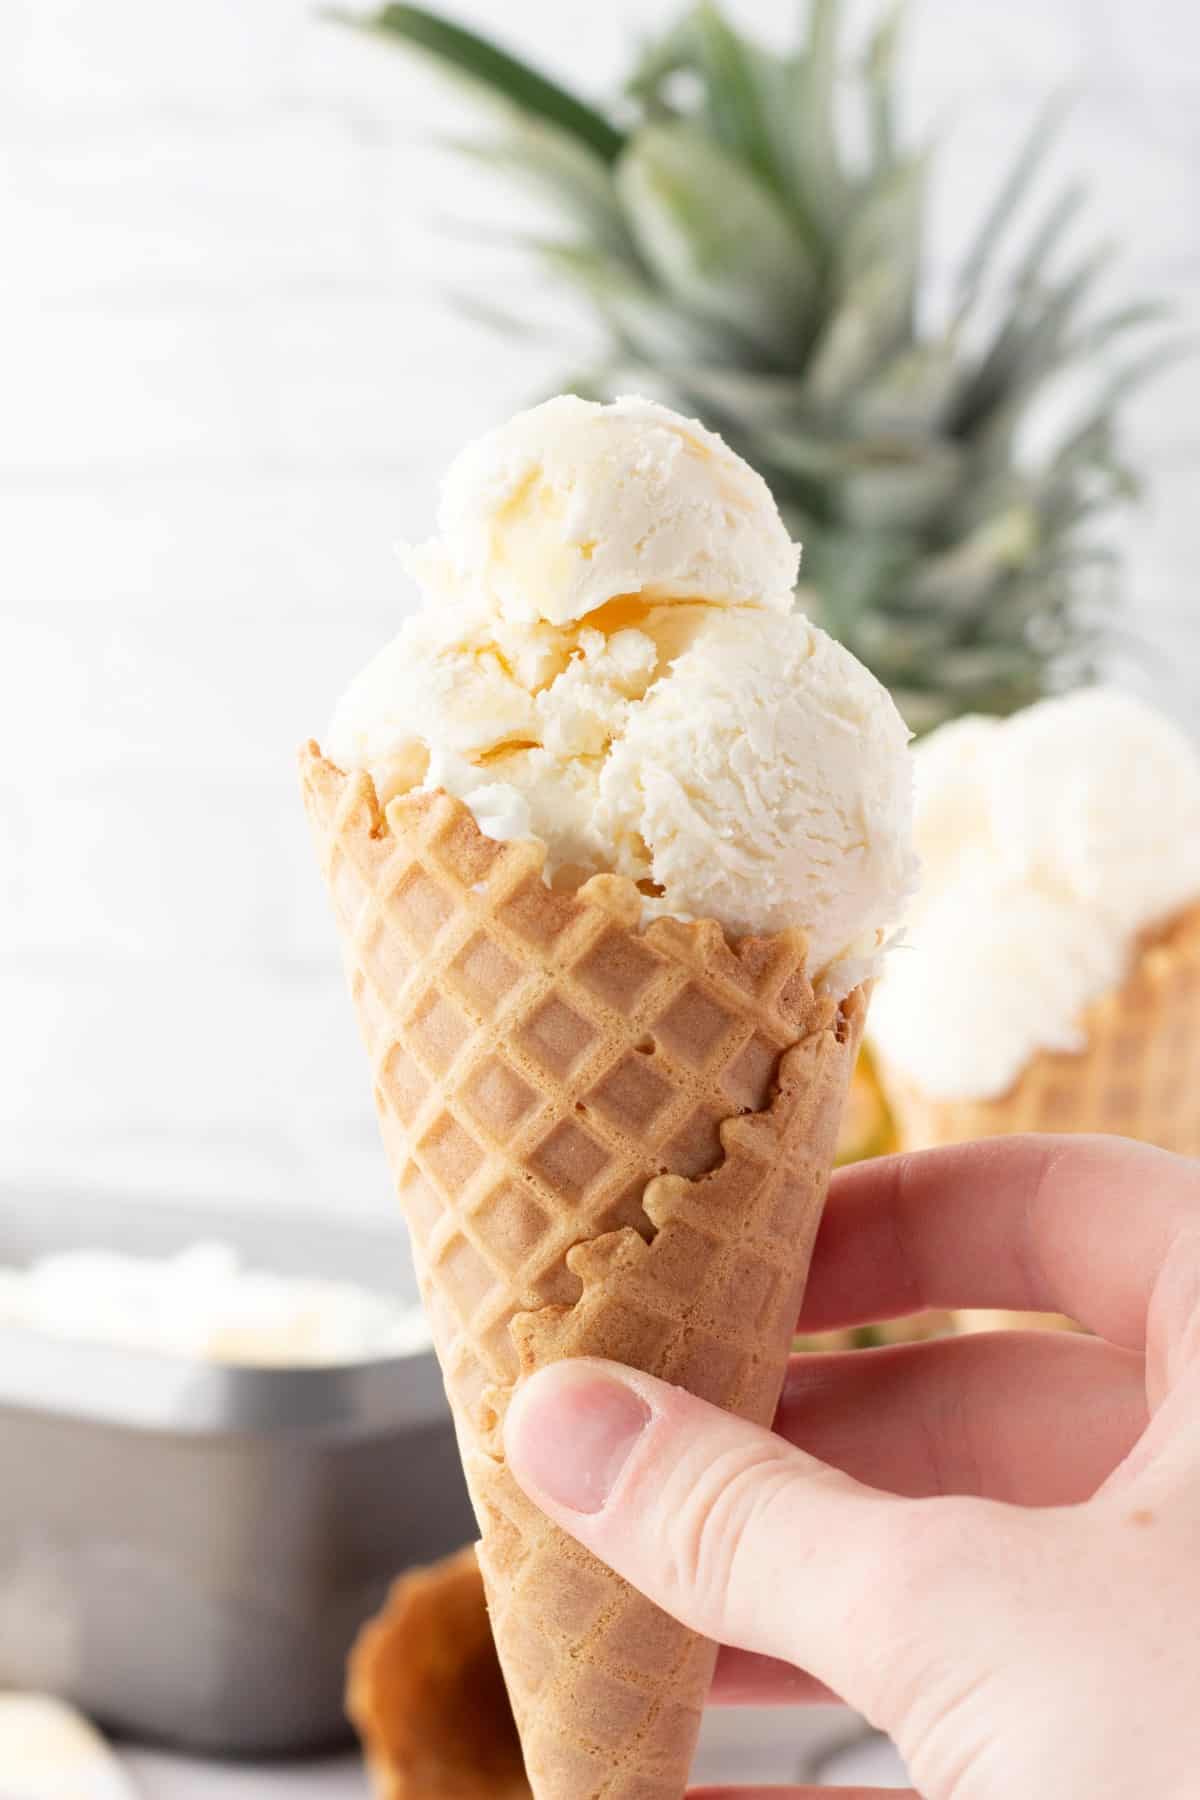 Holding an ice cream cone of Pineapple Coconut Ice Cream